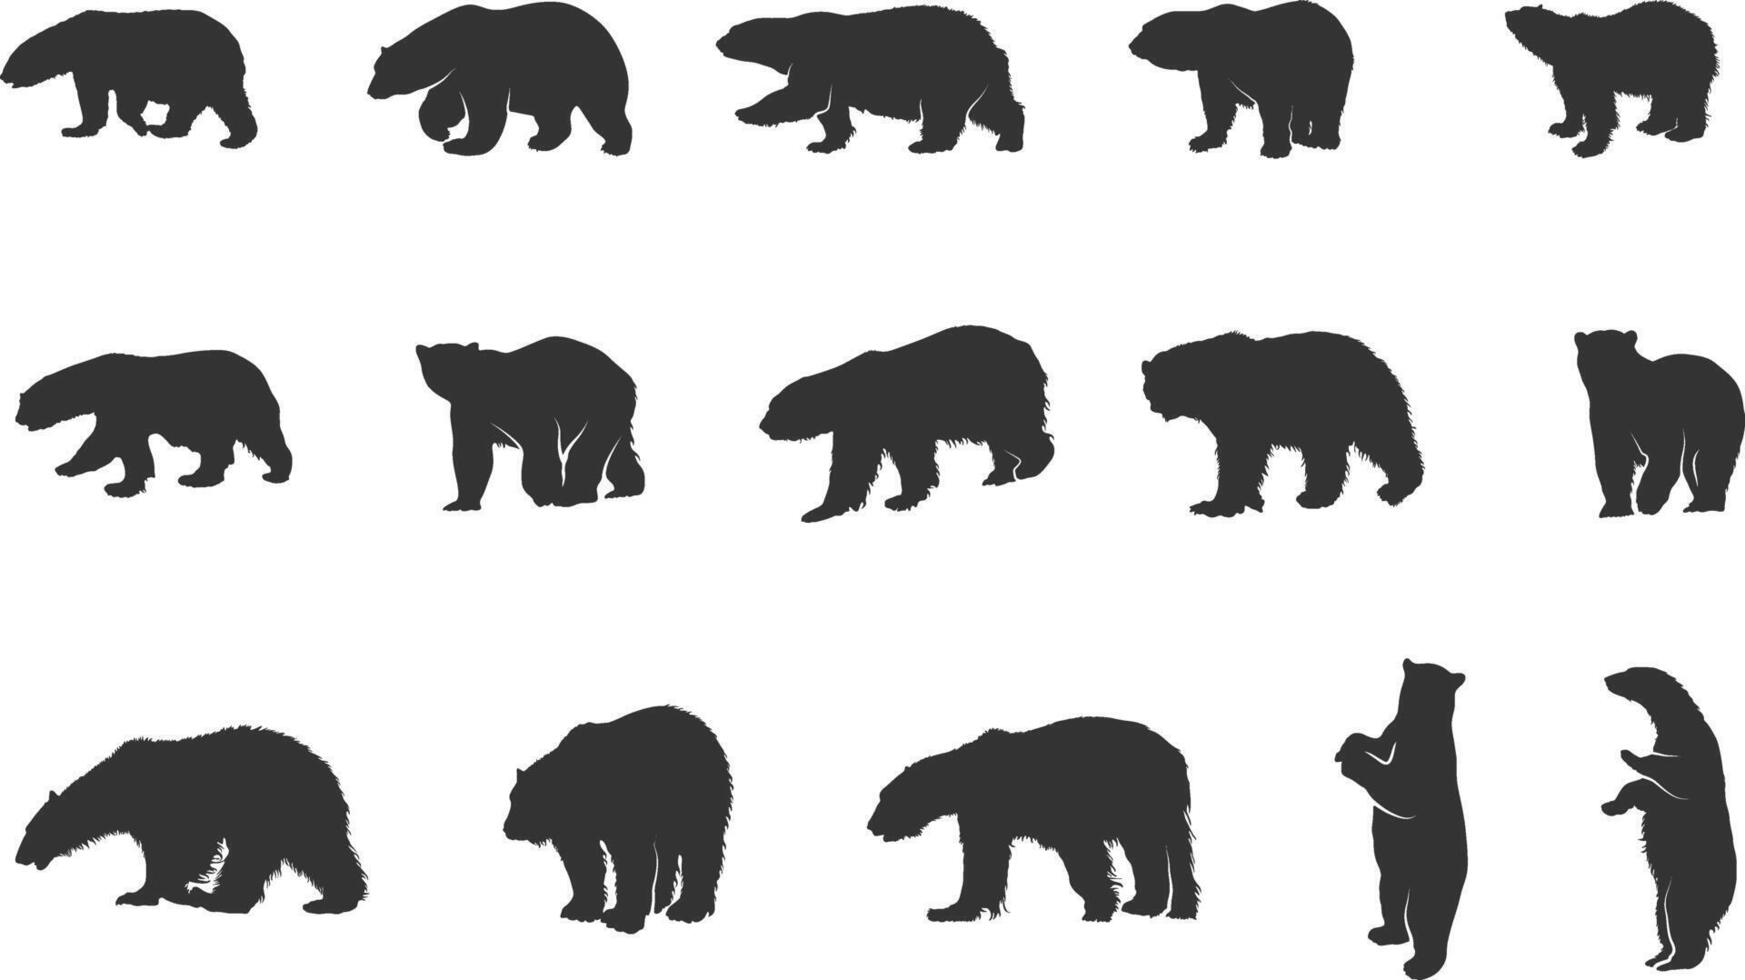 polaire ours silhouettes, polaire ours vecteur illustration, polaire ours vecteur, ours silhouettes, polaire ours clipart